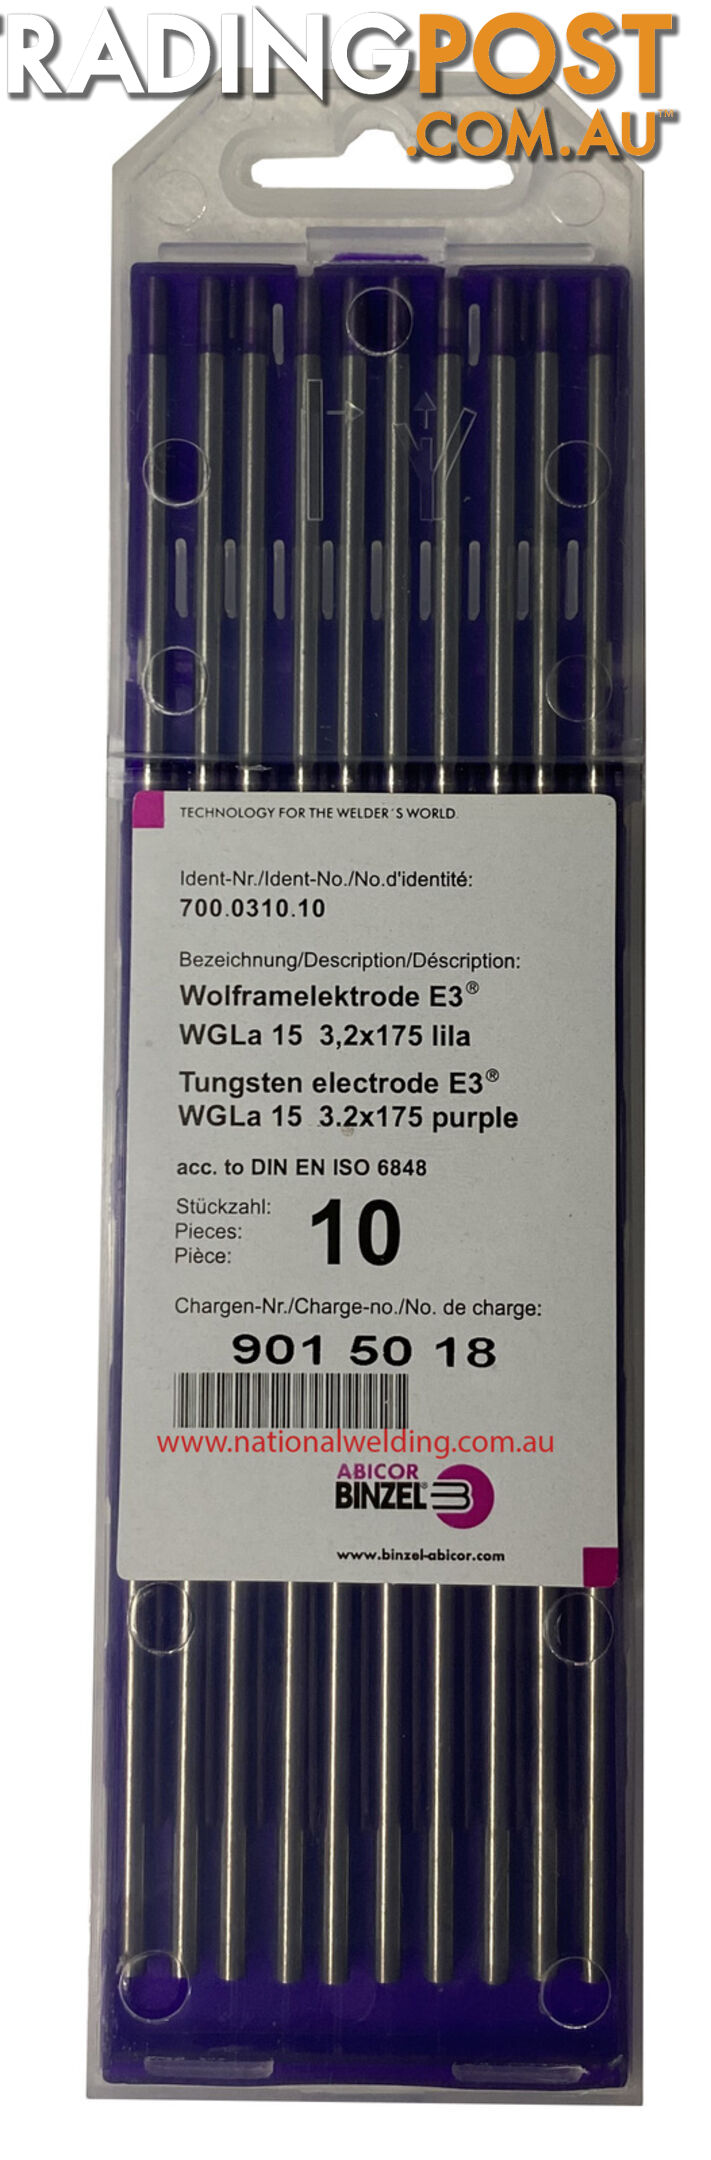 3.2mm E3 Tig Tungsten Electrode Binzel 700.0310.10